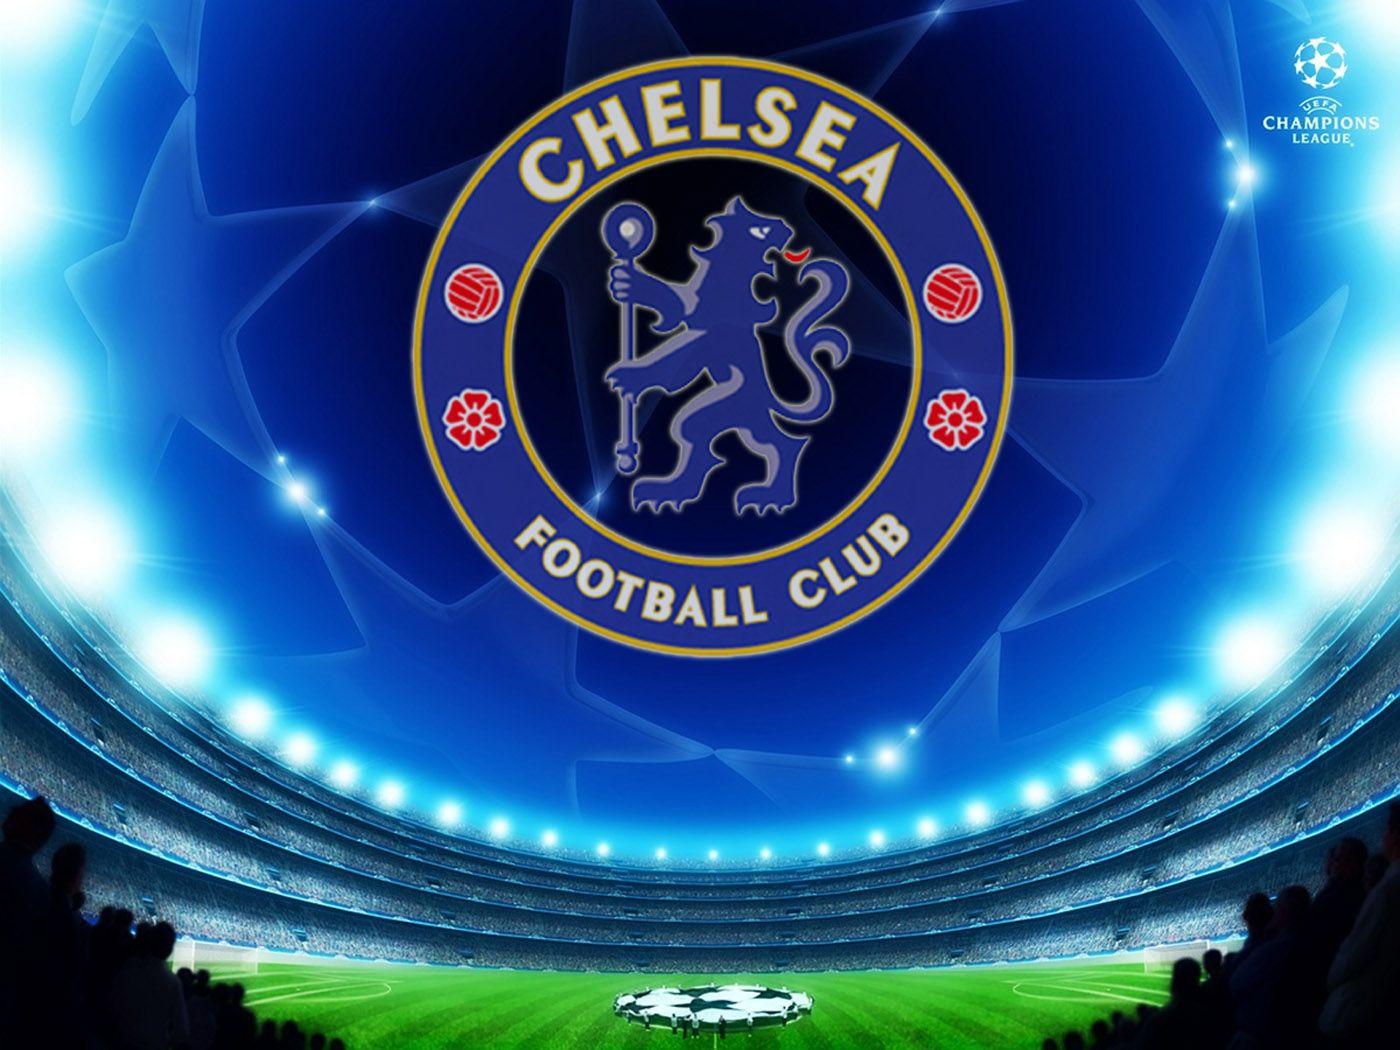 Official Supporters Club Of Chelsea In Vietnam  ĐỔI HÌNH NỀN ĐIỆN THOẠI  HÓNG CHỜ TRẬN CHUNG KẾT UEFA CHAMPIONS LEAGUE MÙA 202021 NÀO   smartphonewallpaperChelsea hinhnendienthoaichelsea  Facebook